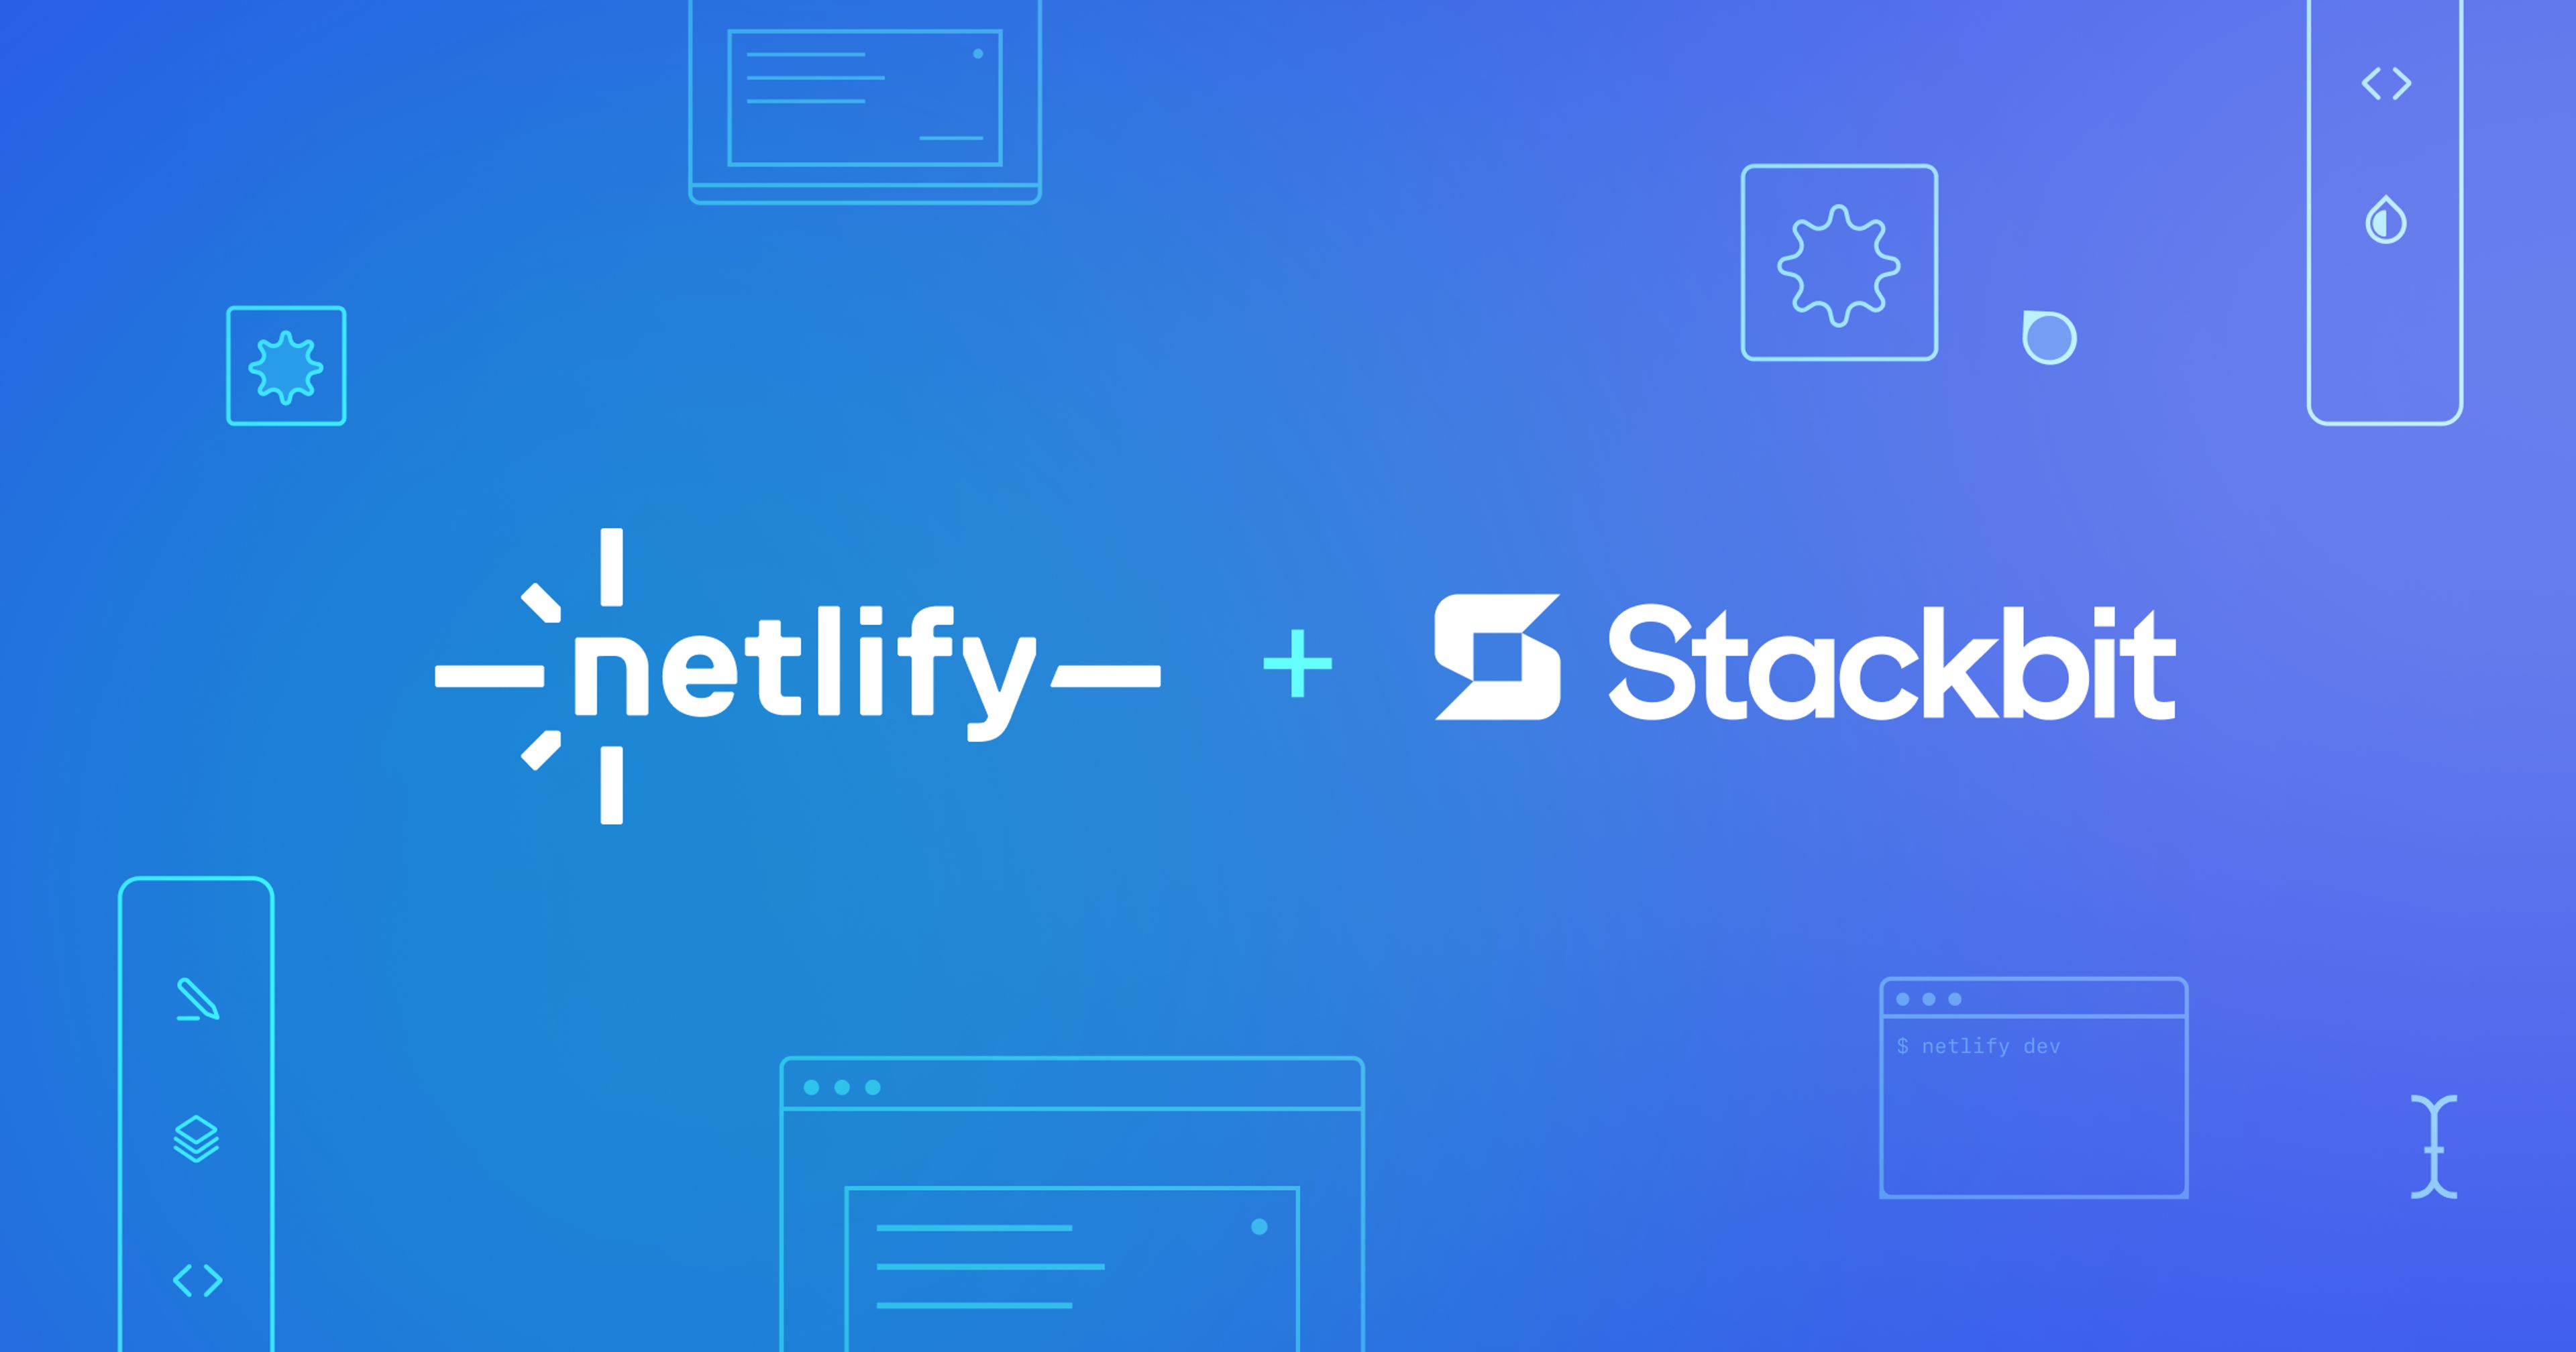 Netlify and Stackbit logos